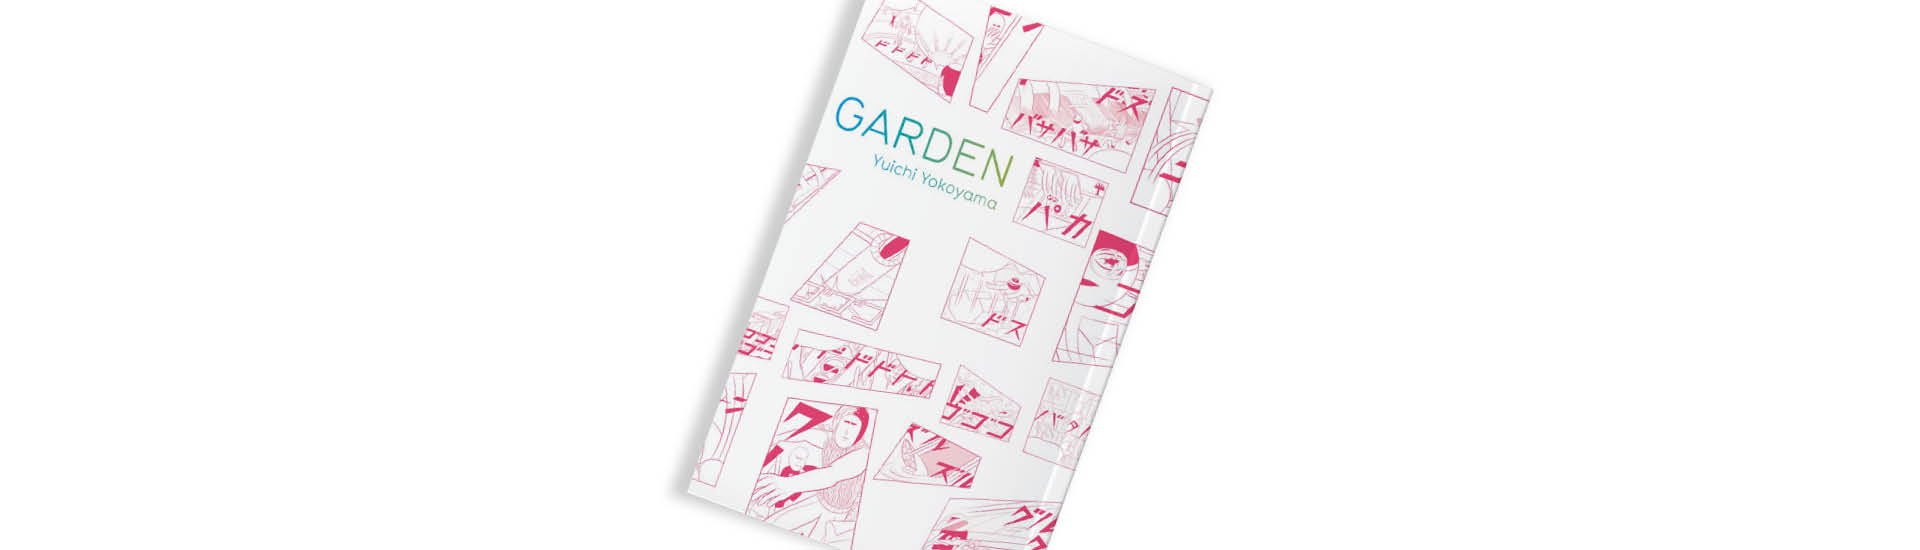 Capa do mangá 'Garden', de Yuichi Yokoyama, em fundo branco.